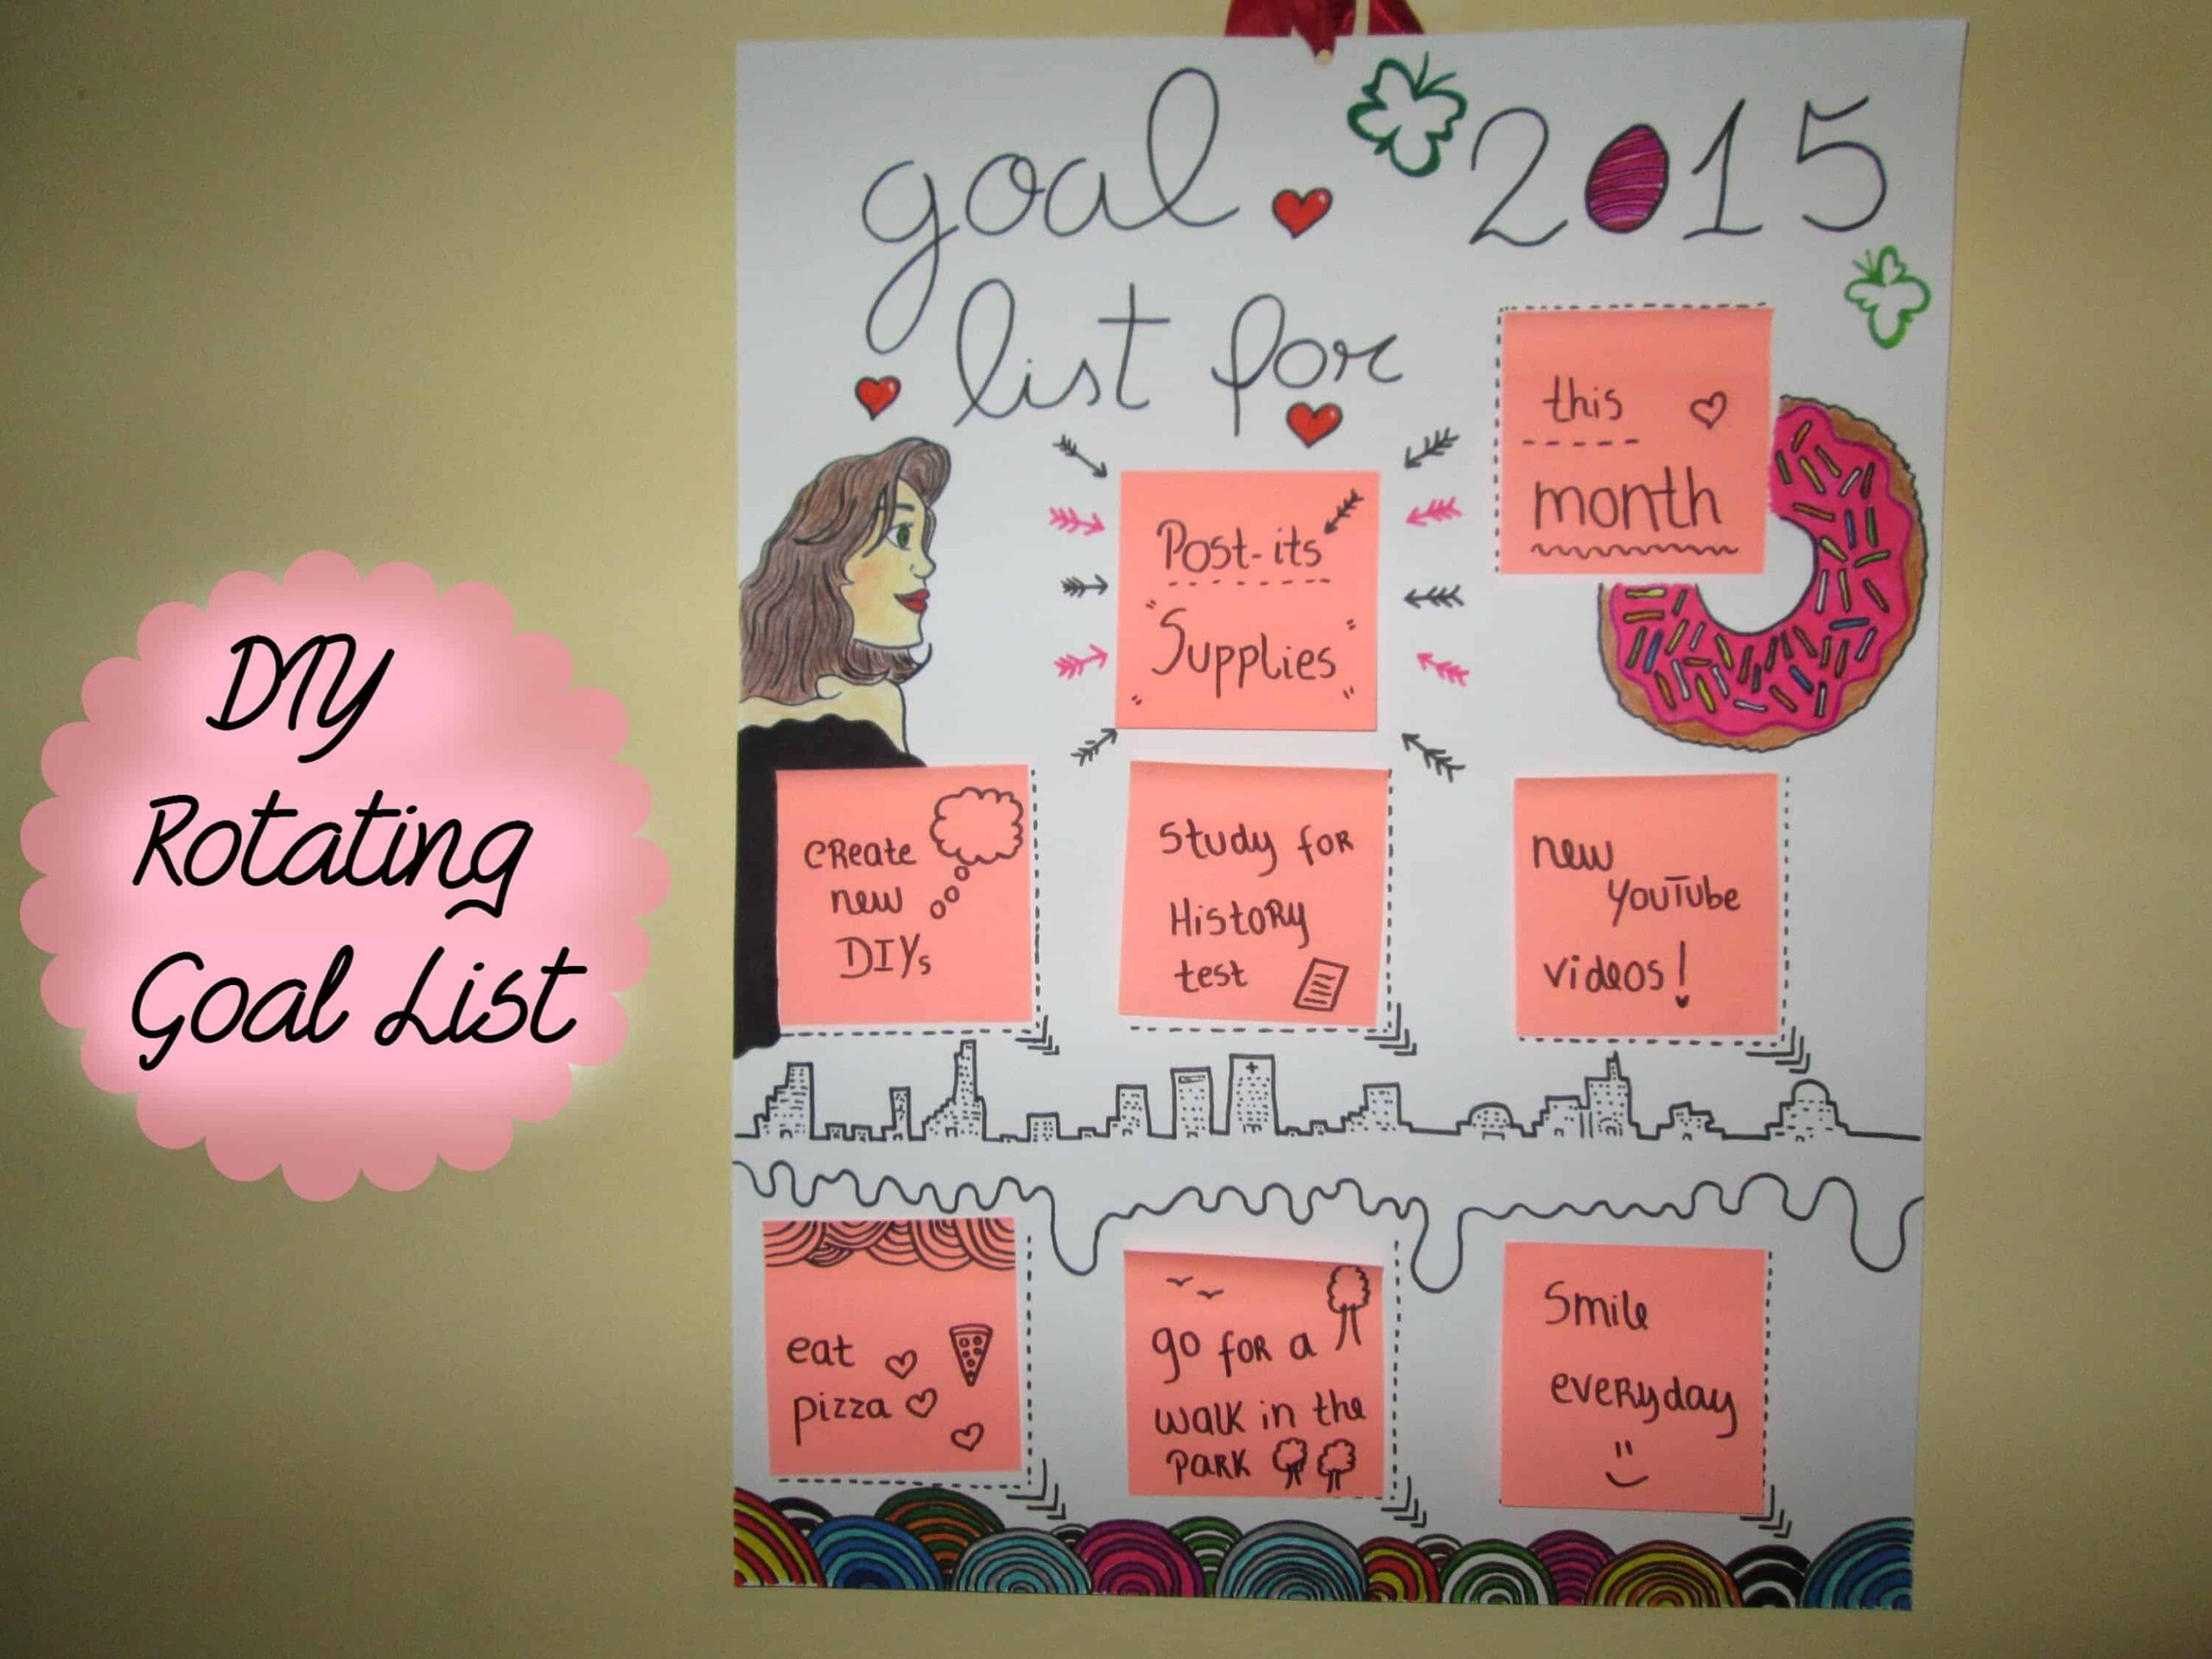 15 Inspiring DIY Ways to Make a New Year's Wish List